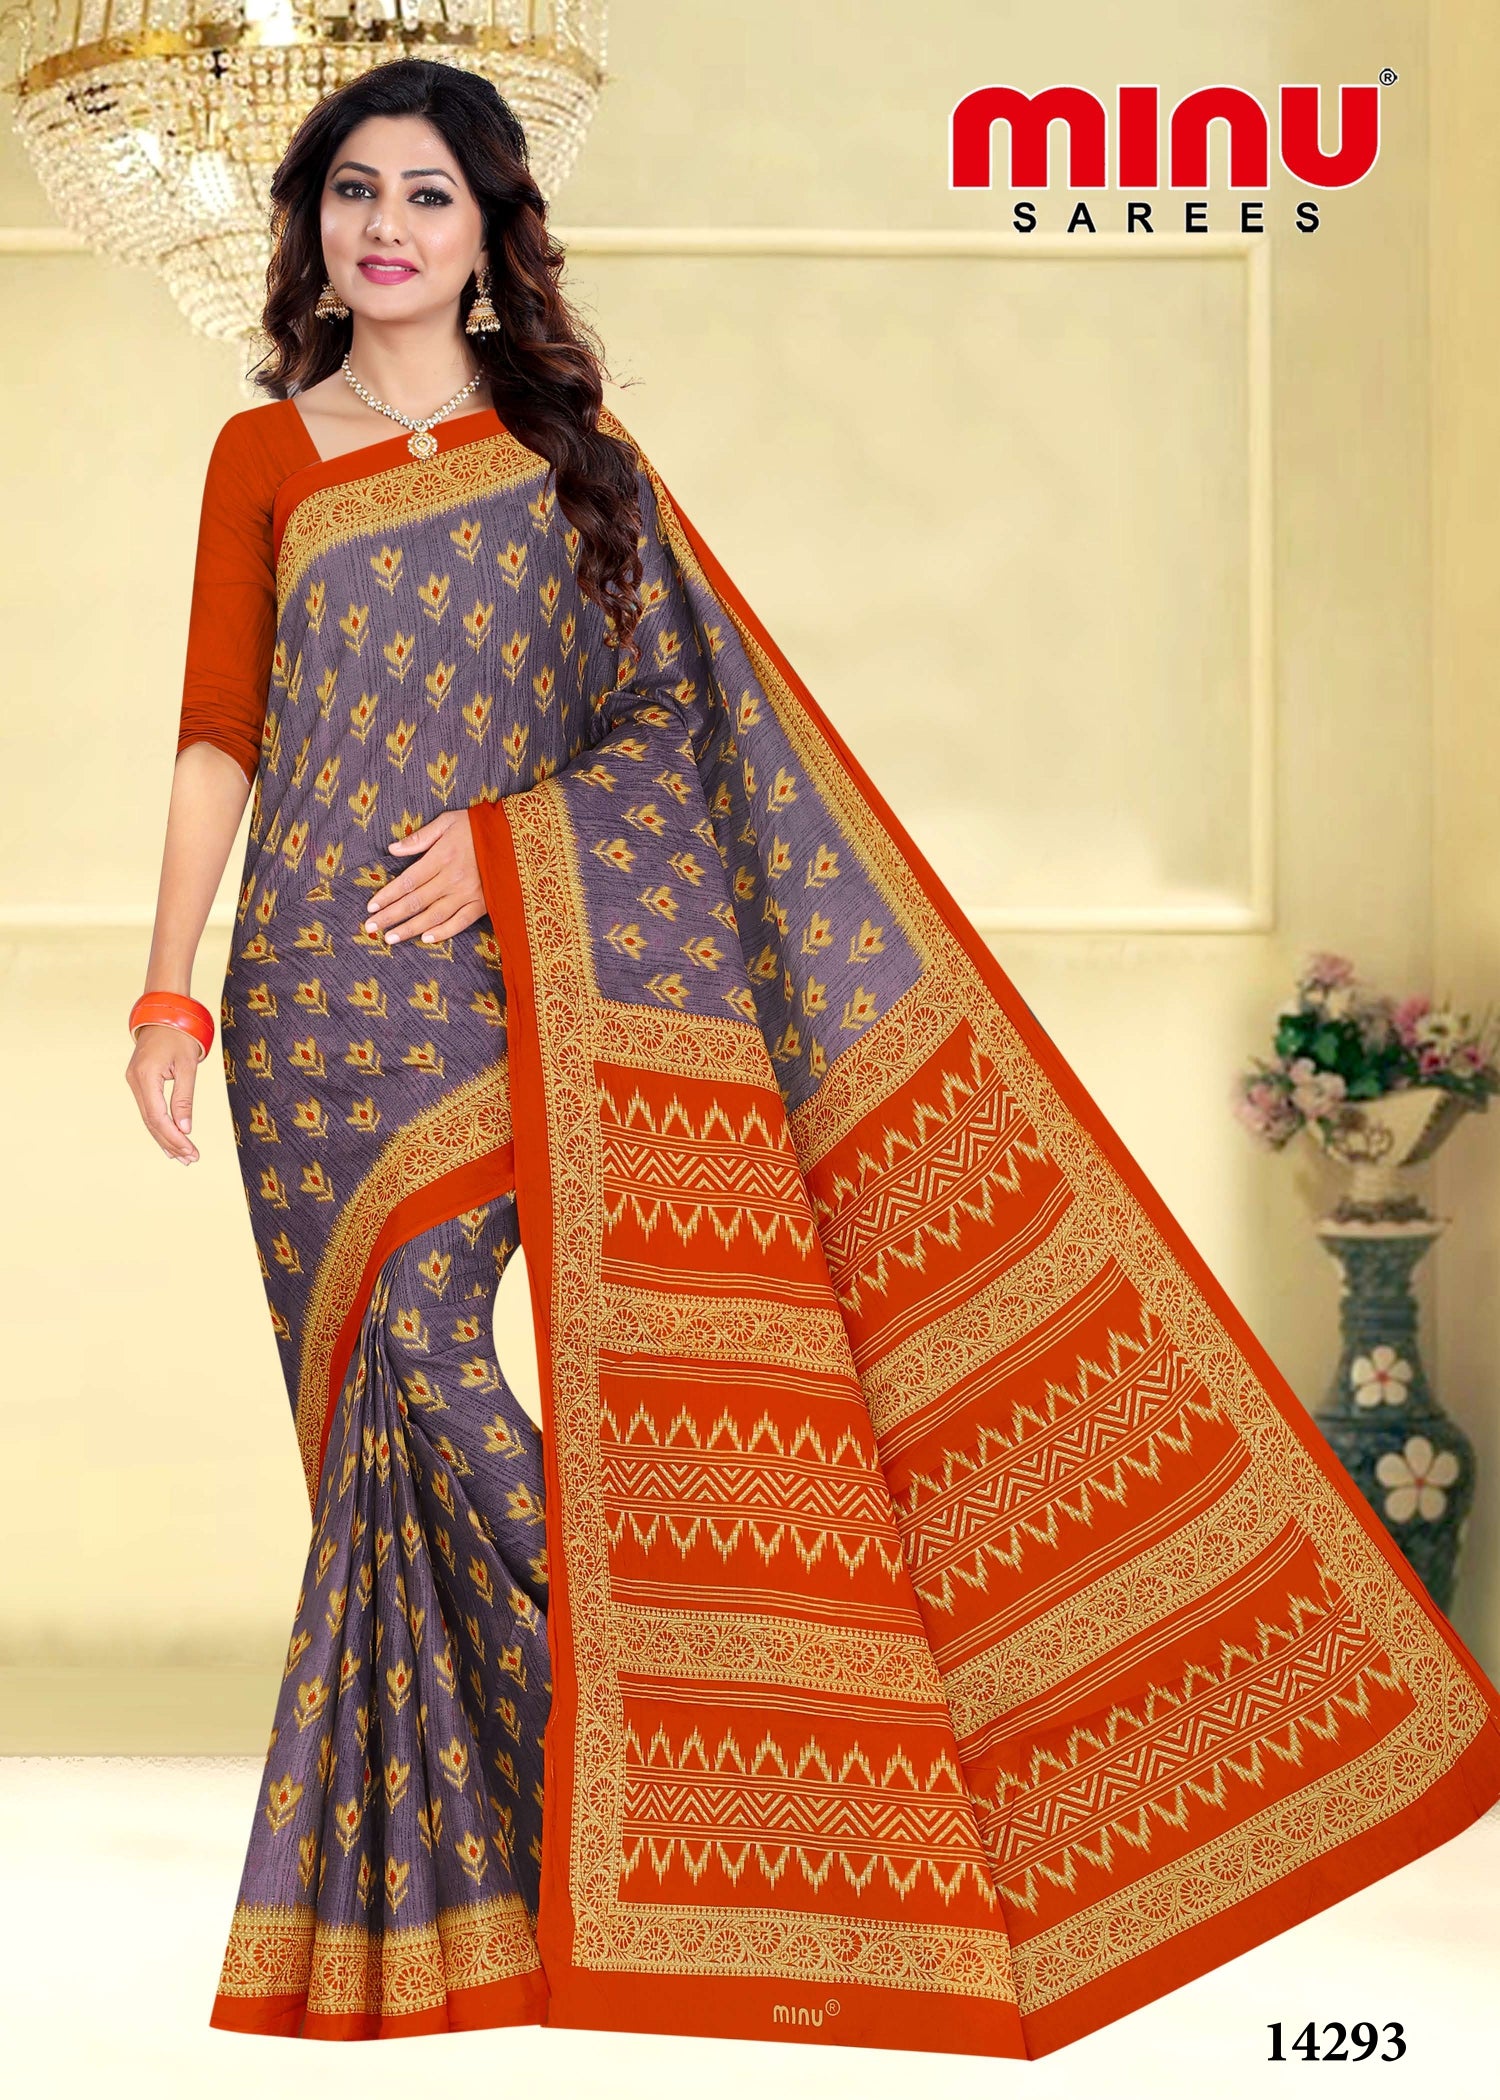 woman wearing printed saree 